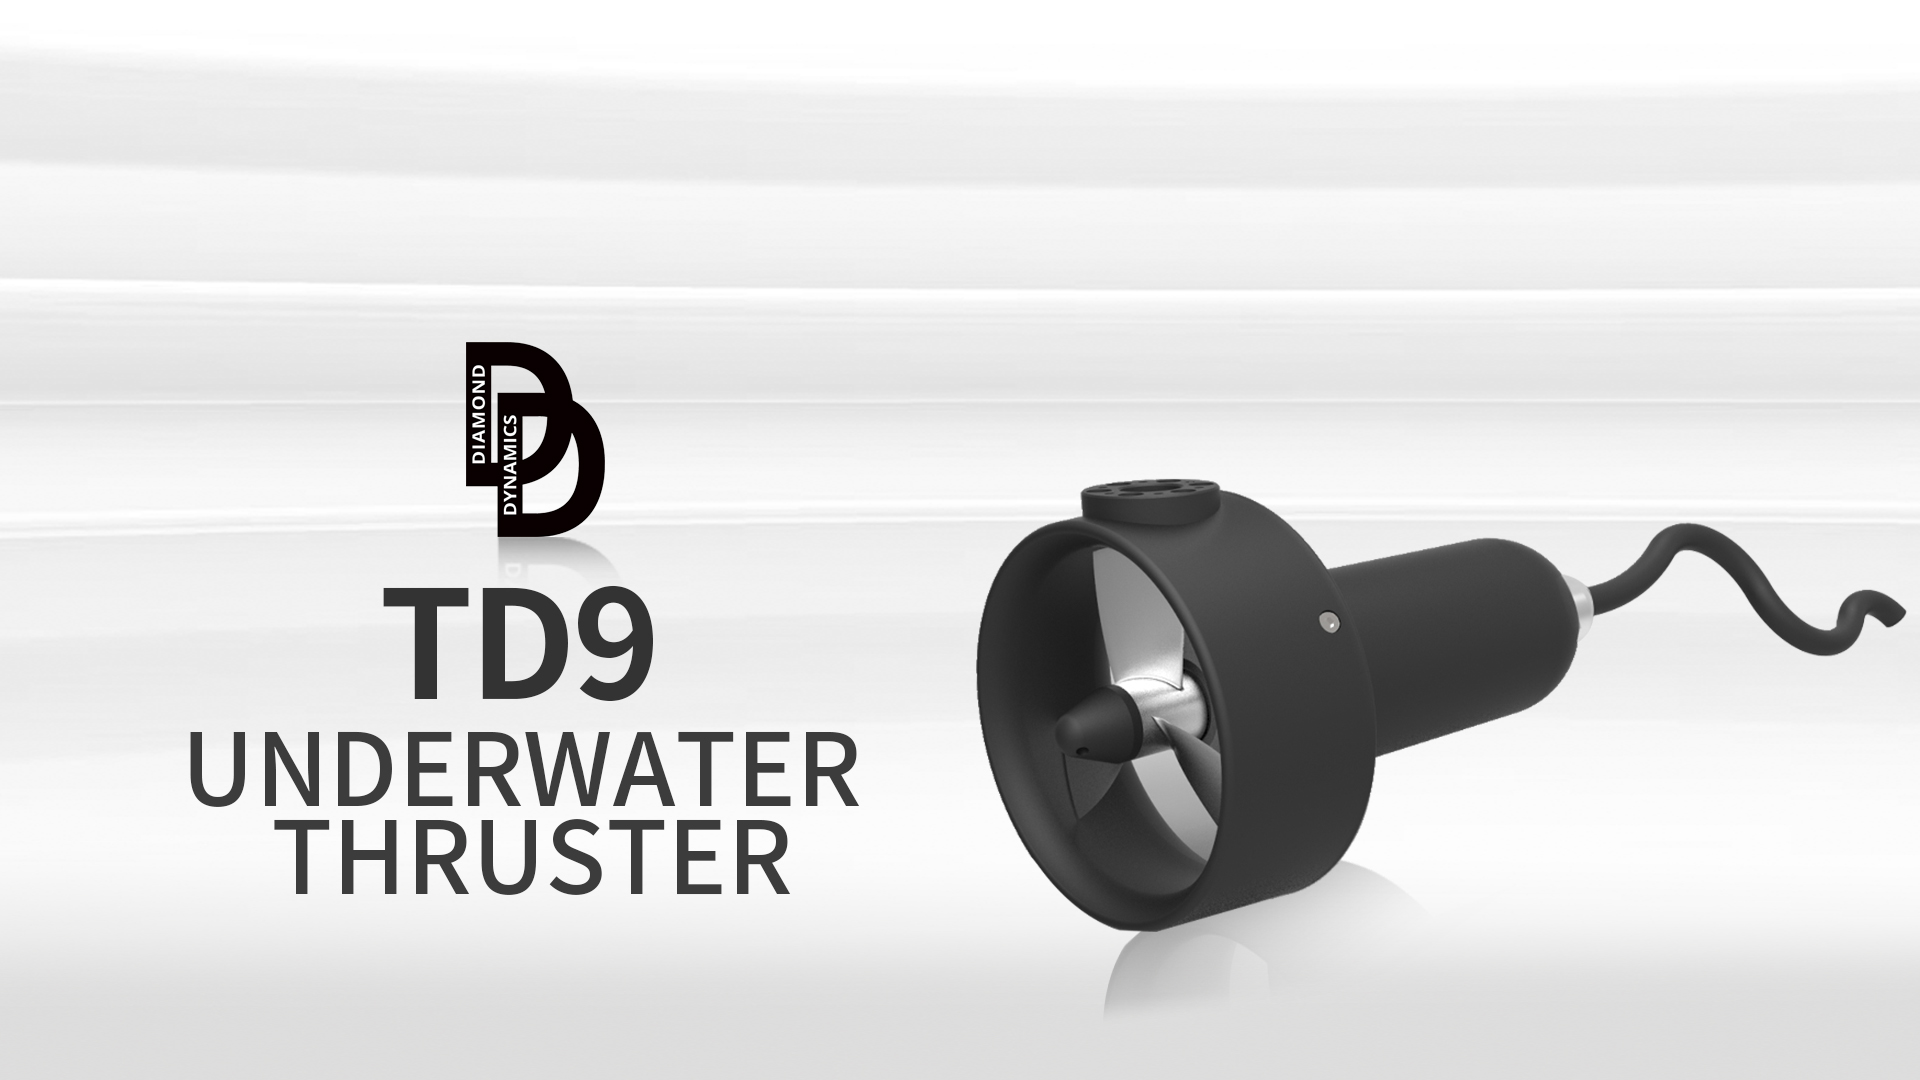 9KG of thrust! Underwater thruster TD9 released